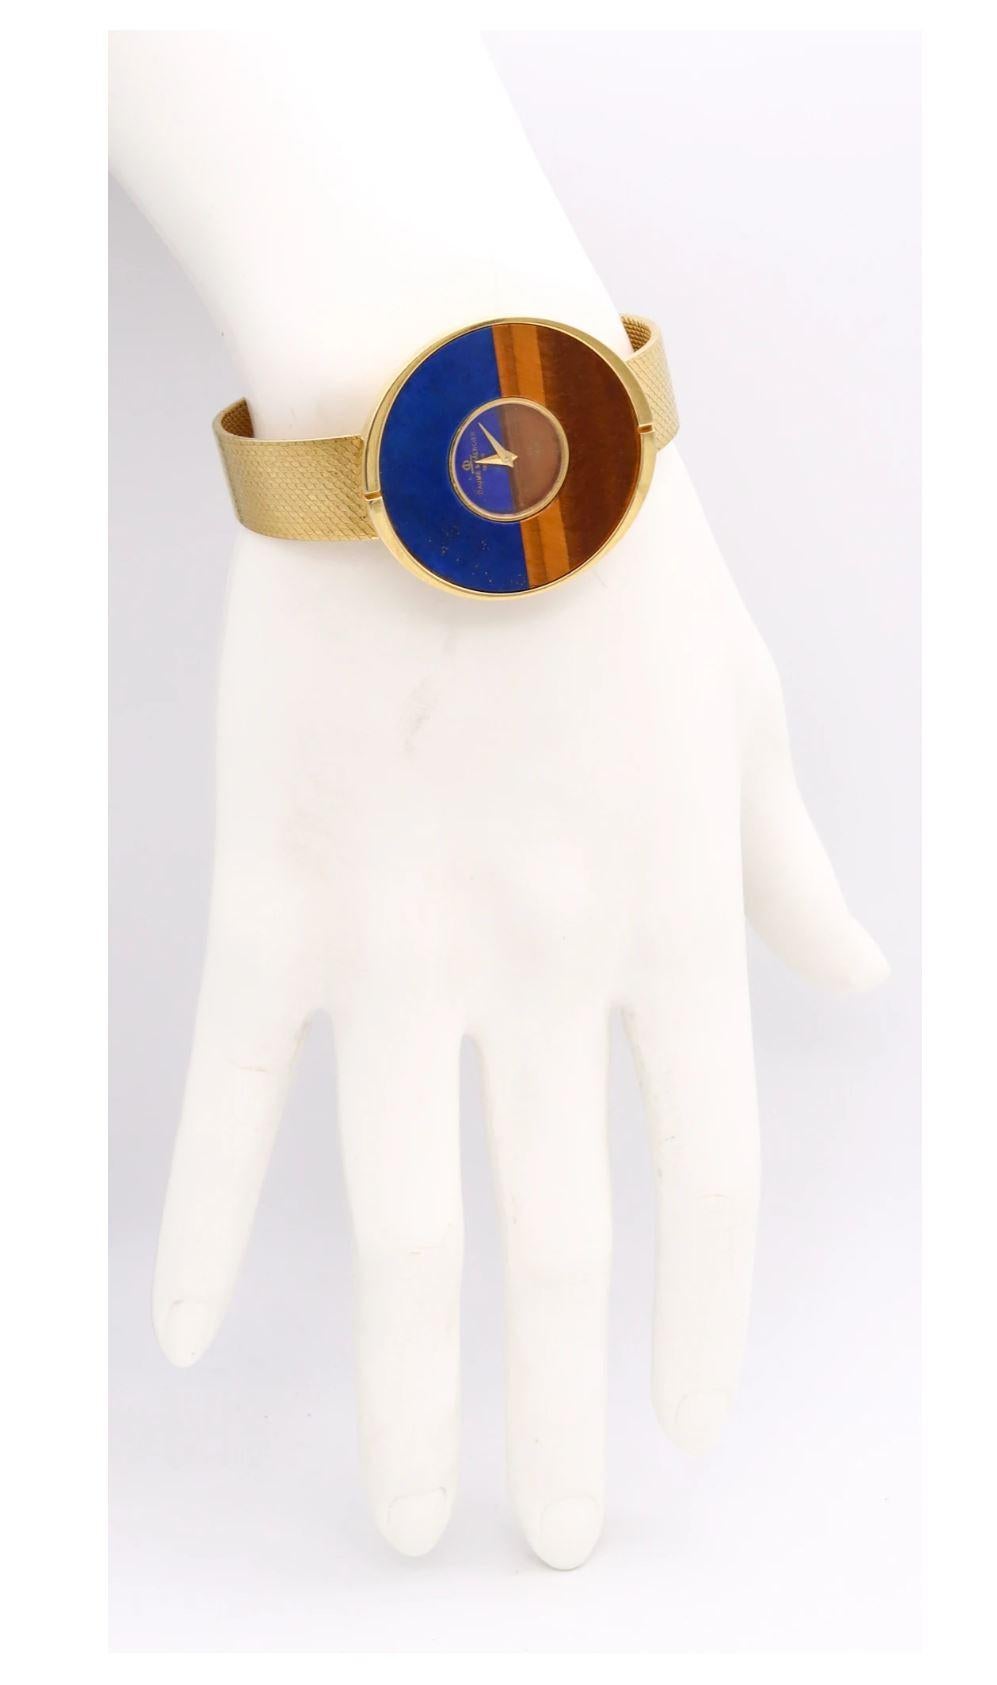 Baume & Mercier Piaget 1970 Retro Modern Bracelet Wristwatch in 18Kt with Lapis For Sale 2